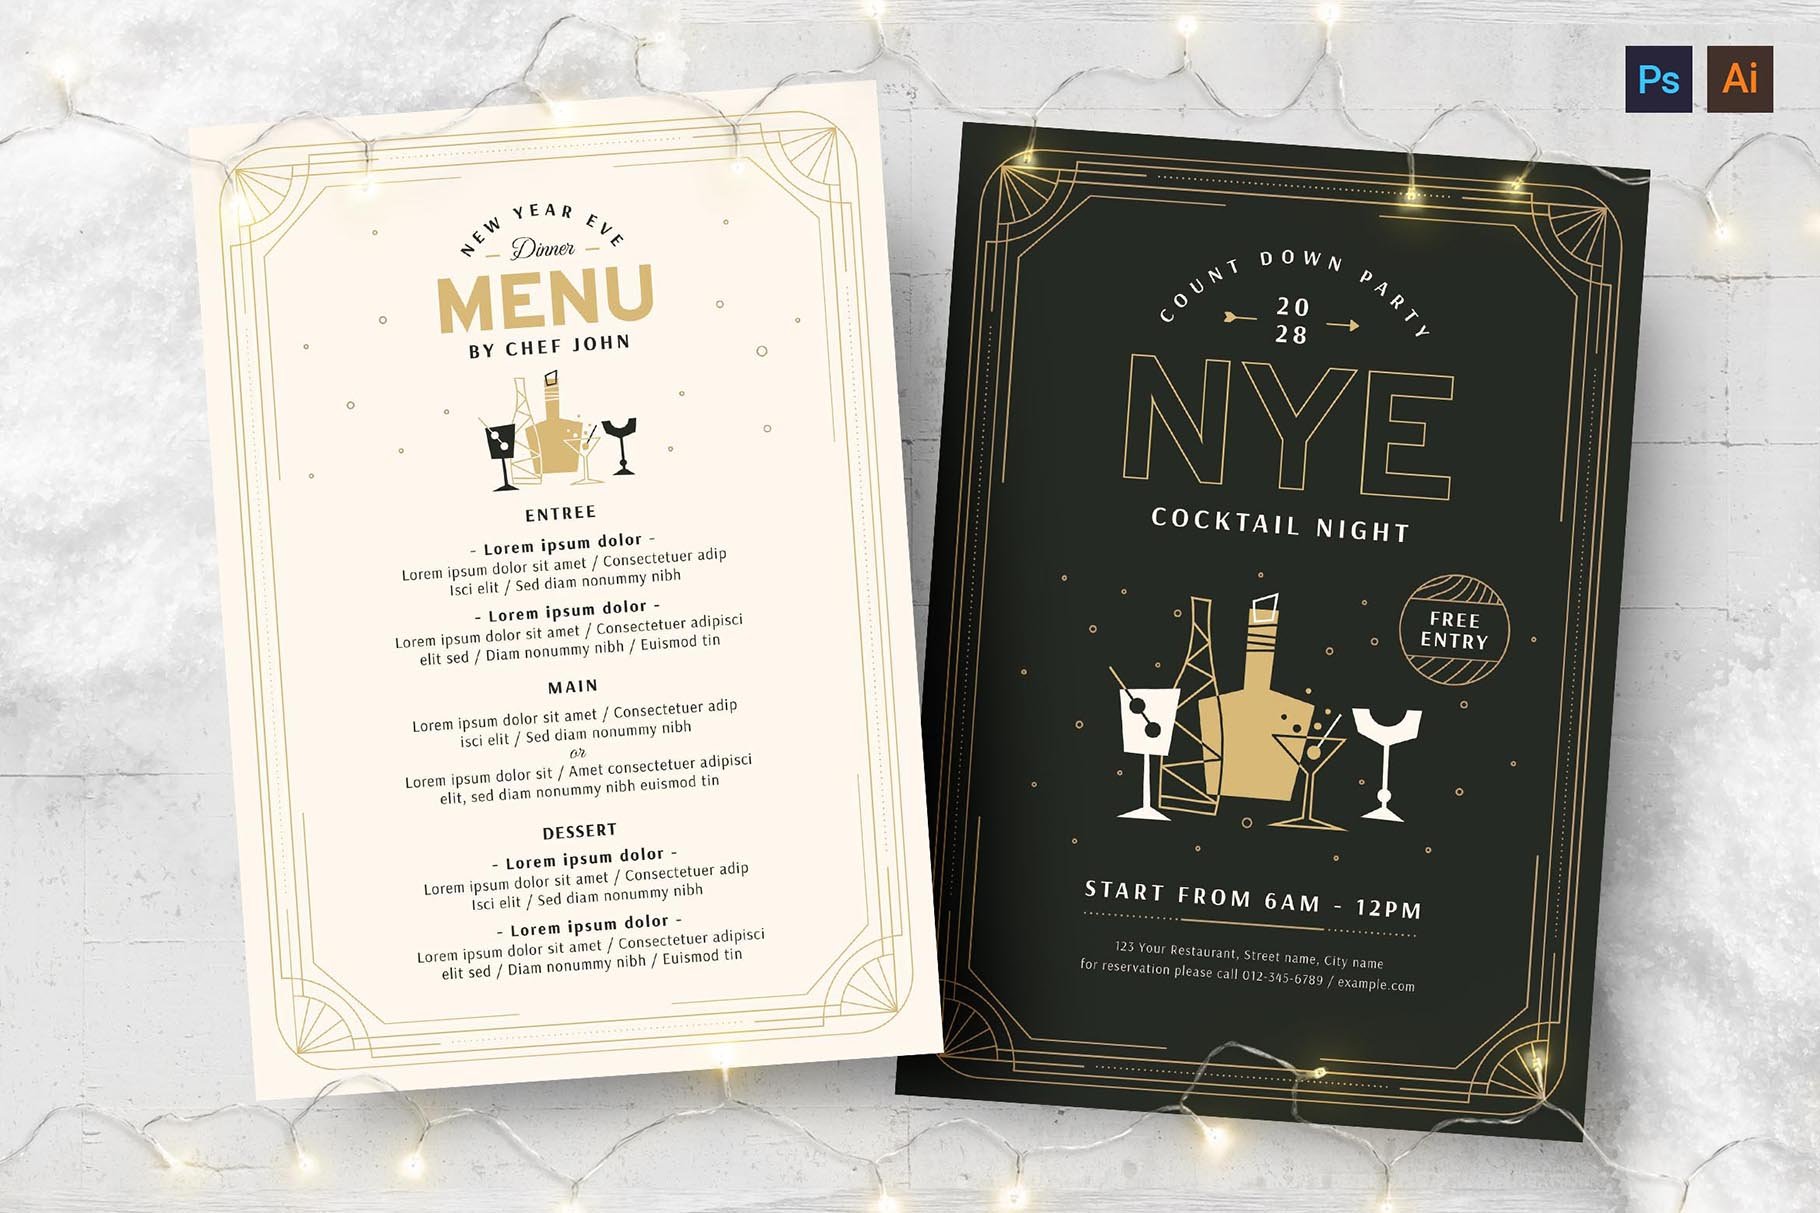 NYE Flyer & Cocktail Menu Templates cover image.